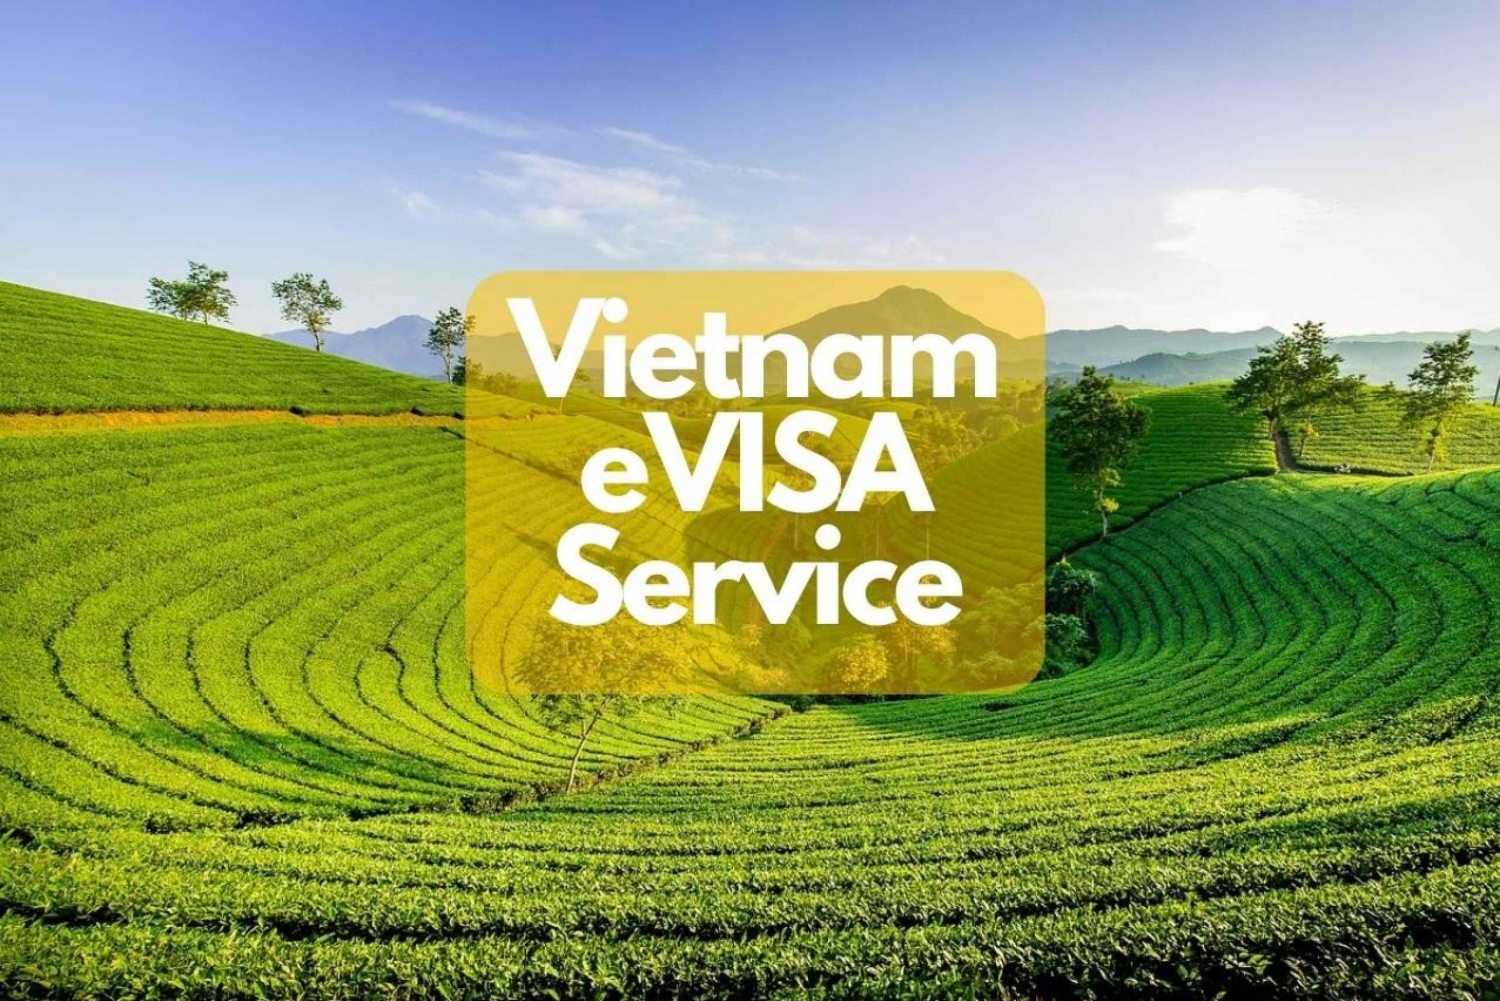 Servizio Vietnam E-Visa per i viaggiatori internazionali